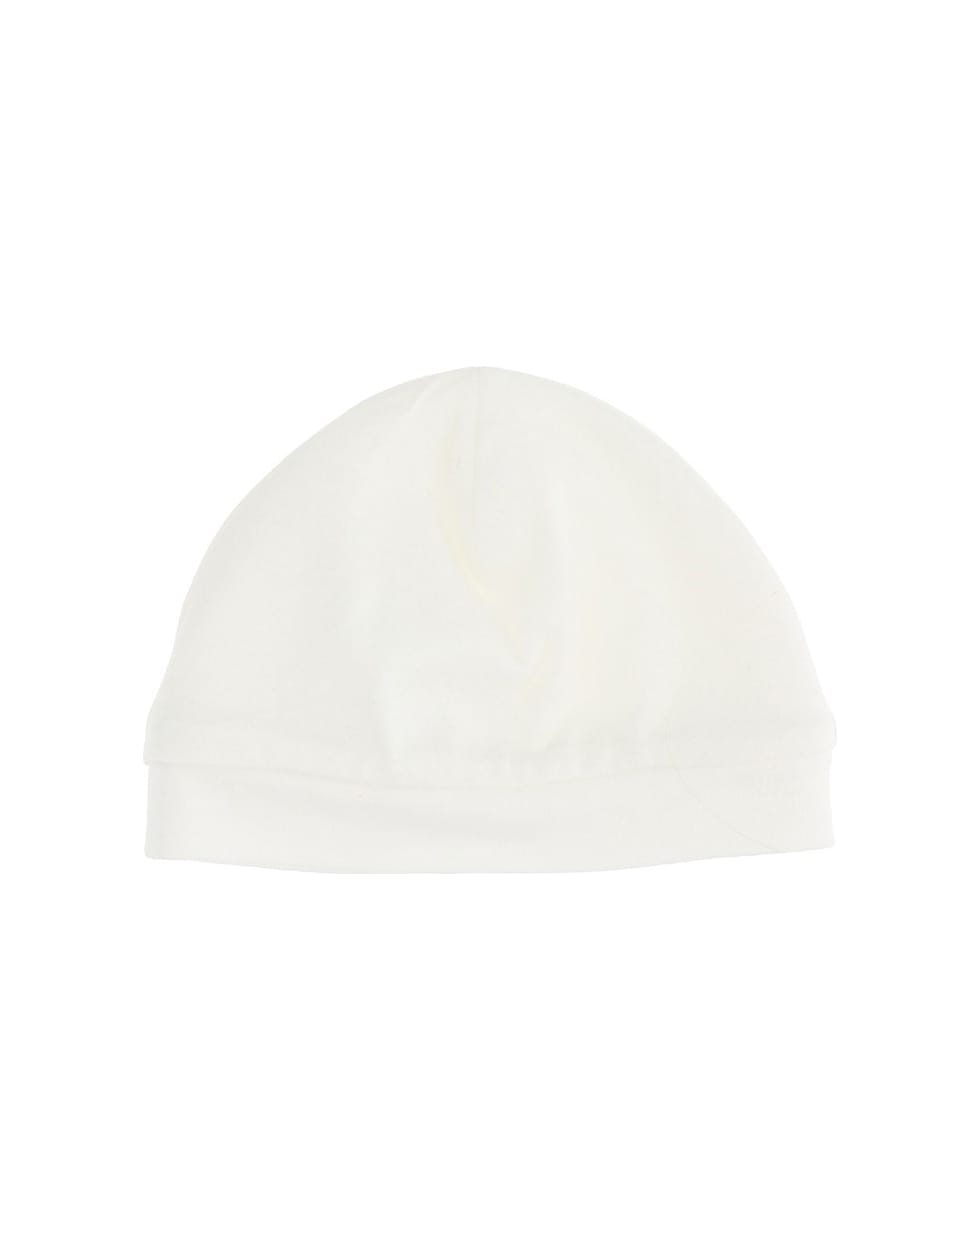 Chiara Ferragni Eyestar Hat In White Cotton - White